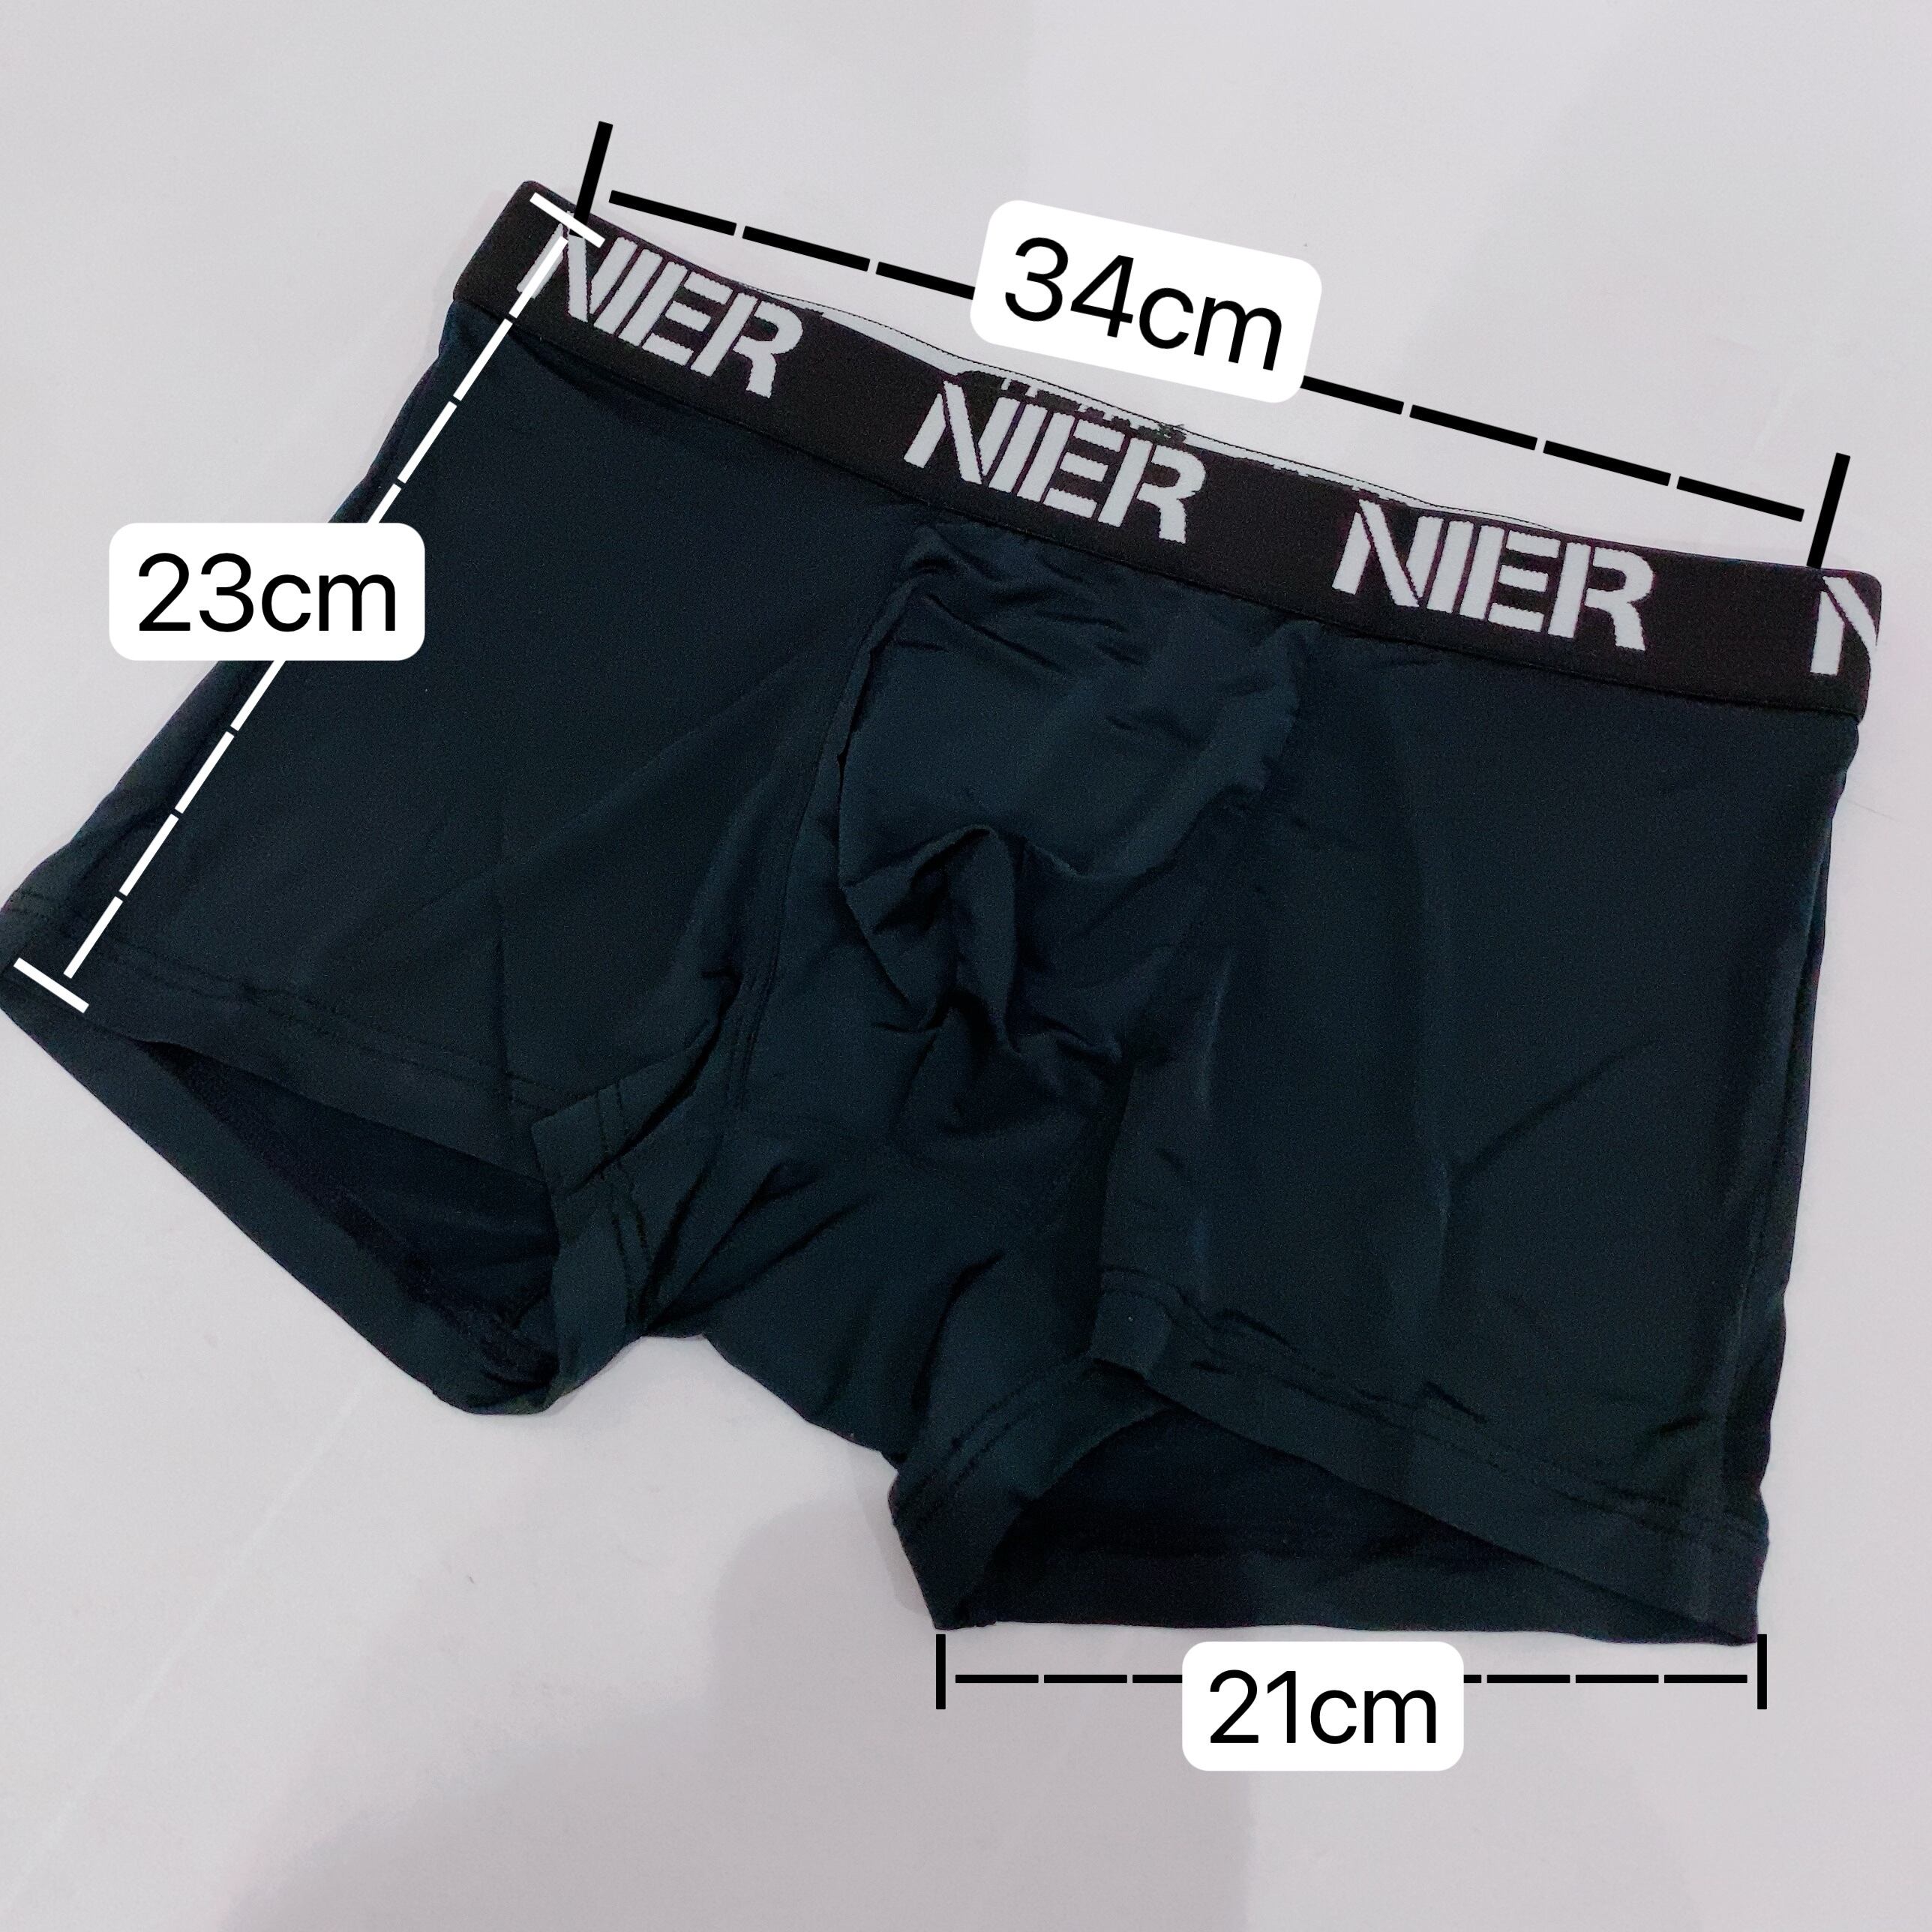 NieRボクサーパンツ【MENS】 | NIER CLOTHING powered by BASE